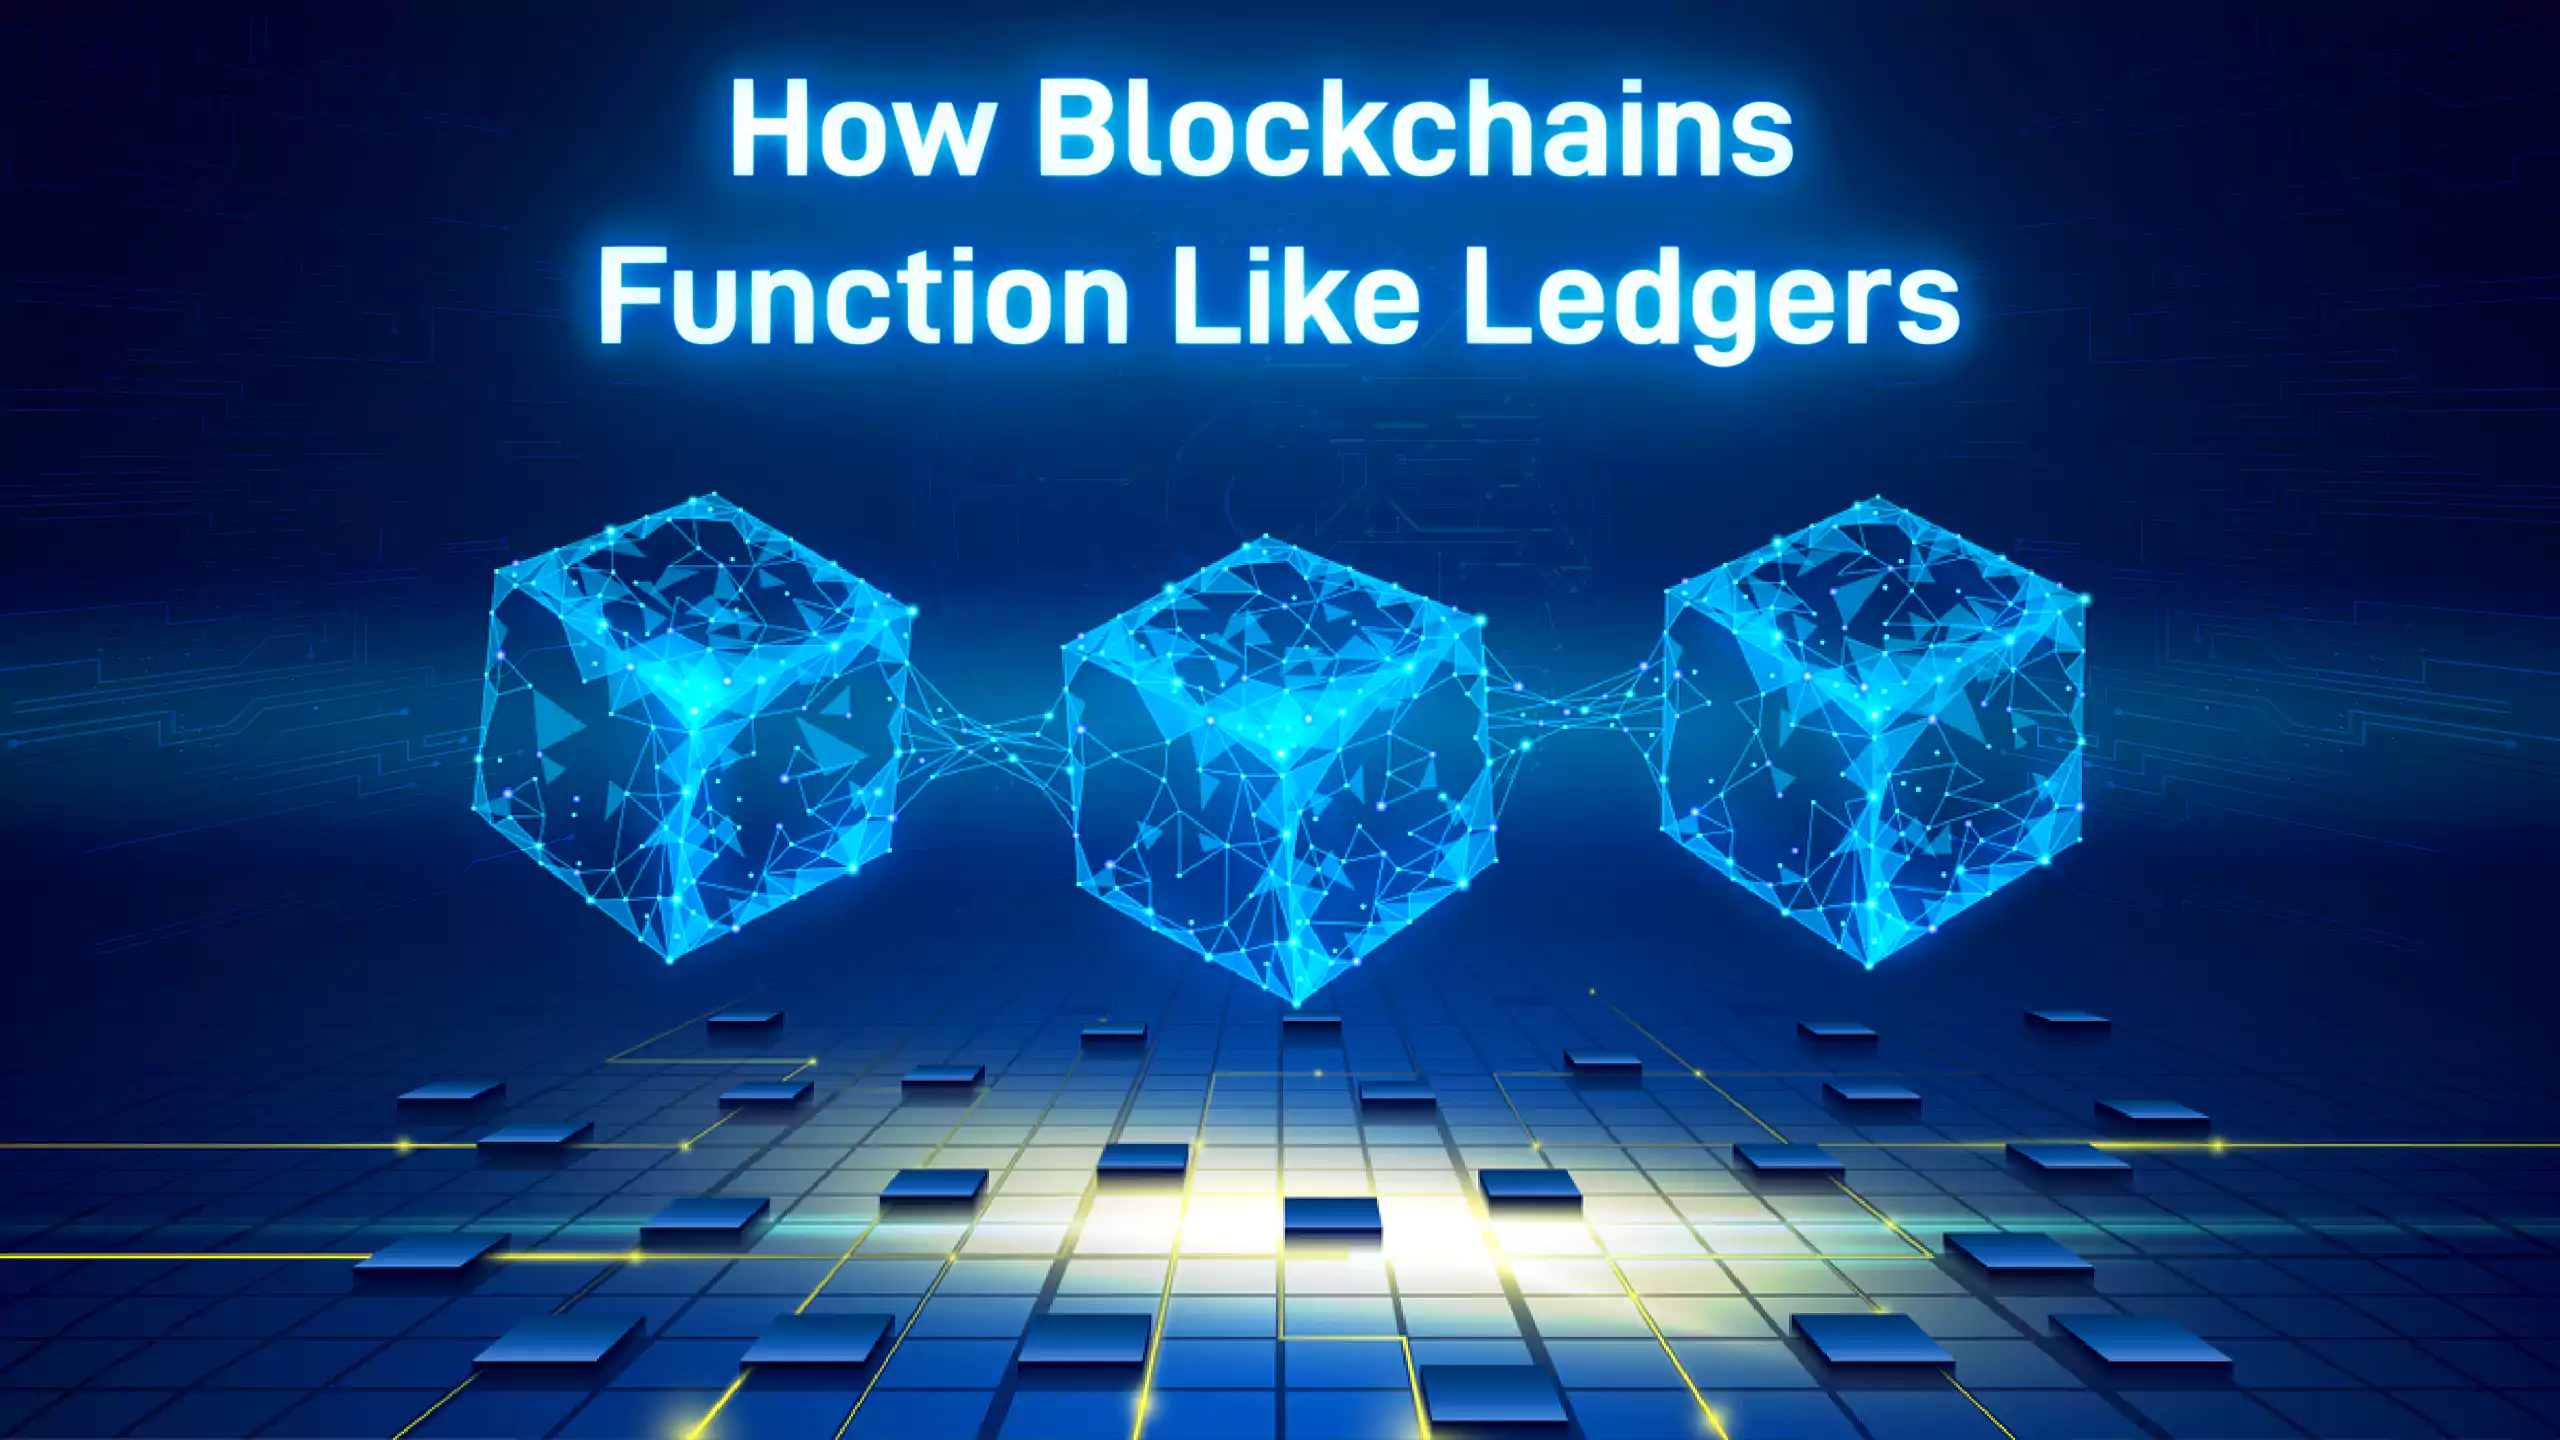 How do Blockchains Function Like Ledgers?